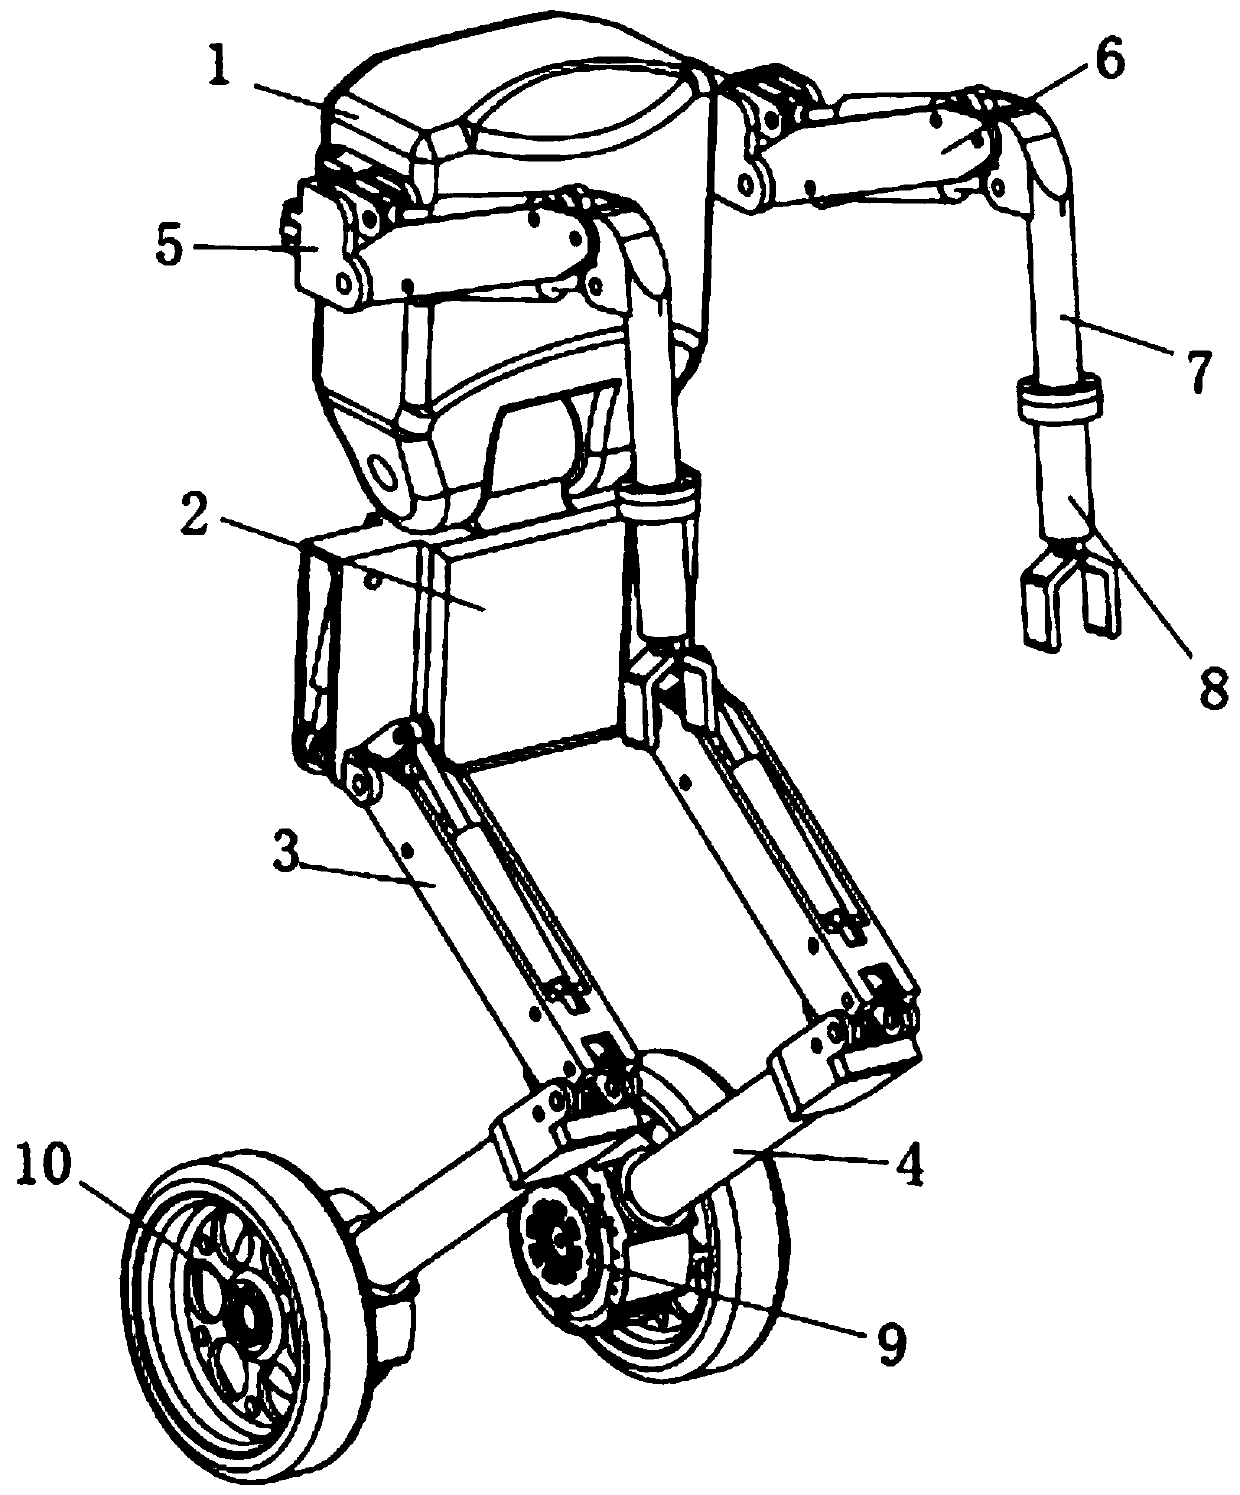 Double-leg and double-wheel composite motion robot